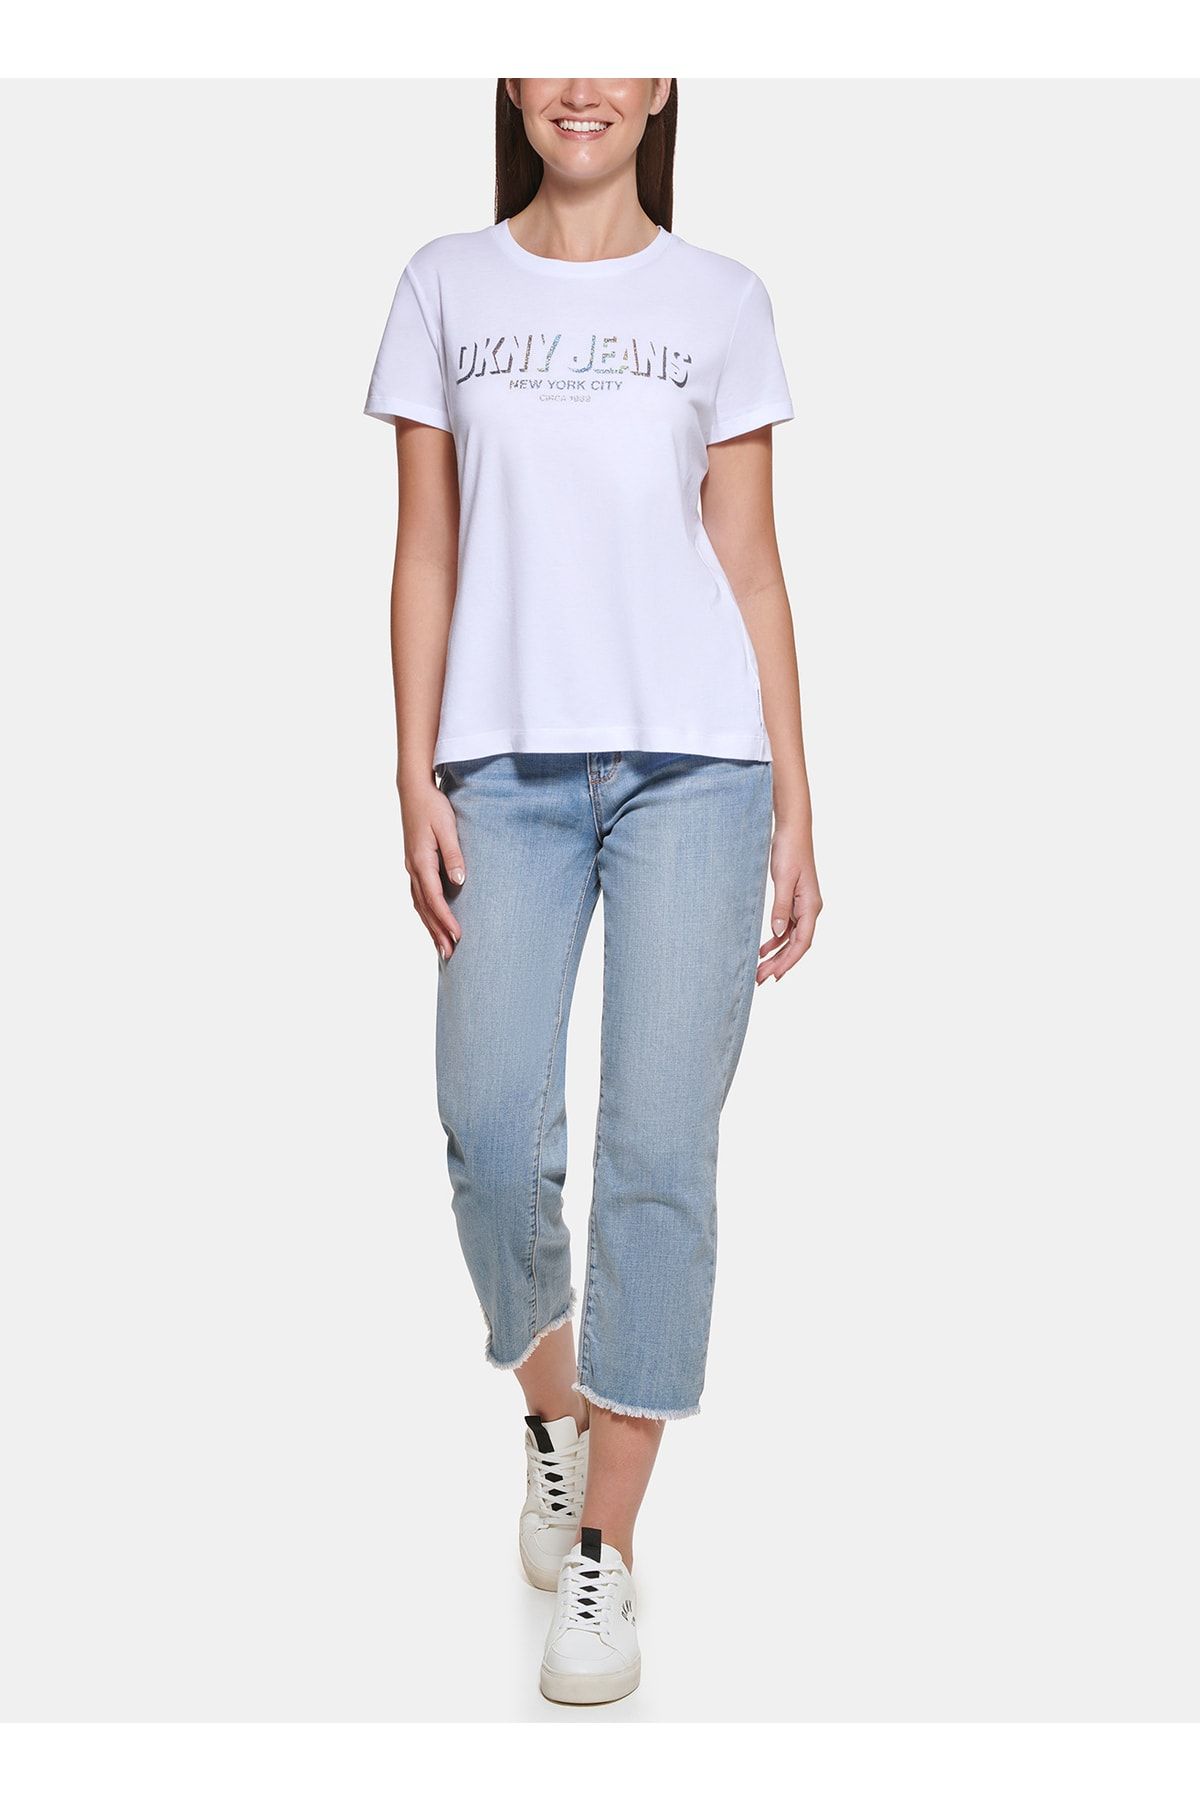 Dkny Jeans Bisiklet Yaka Baskılı Beyaz Kadın T-shirt E22fbdna